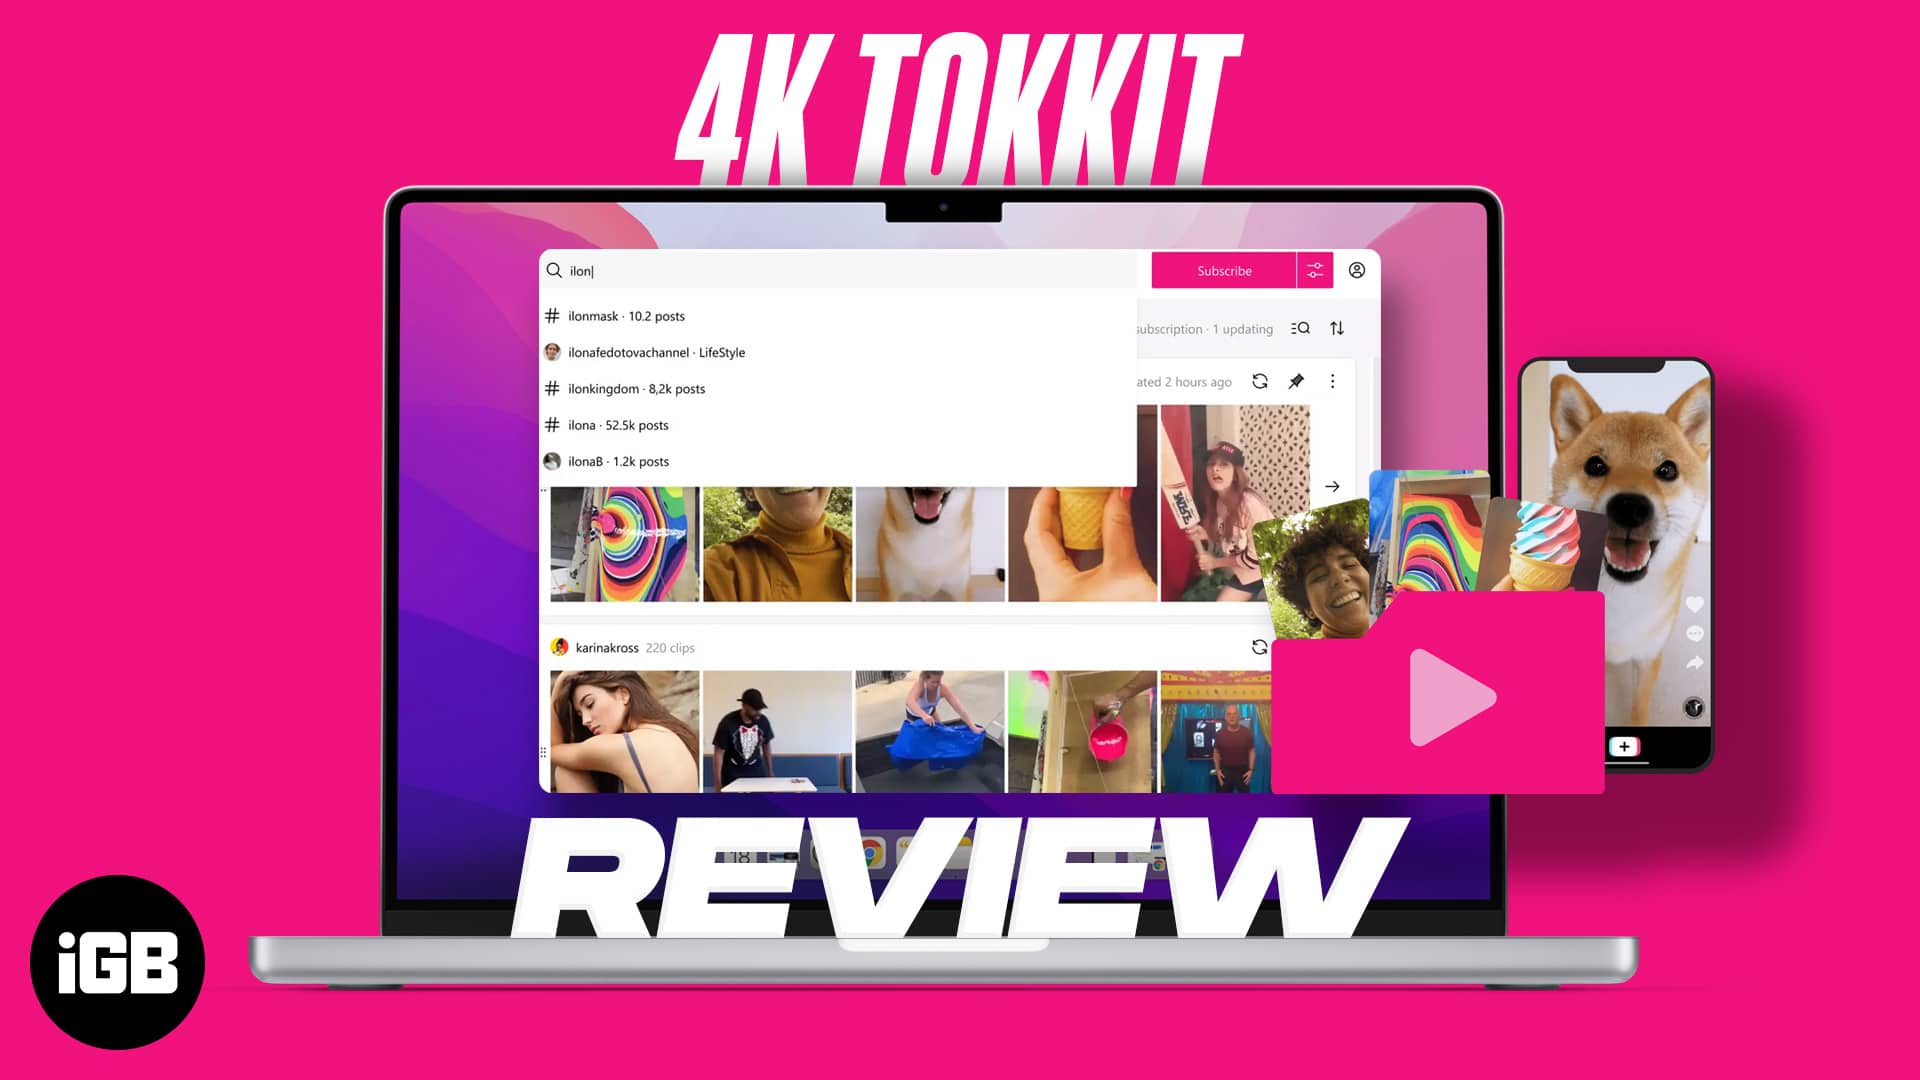 4k tokkit review to download tiktok videos on desktop quickly